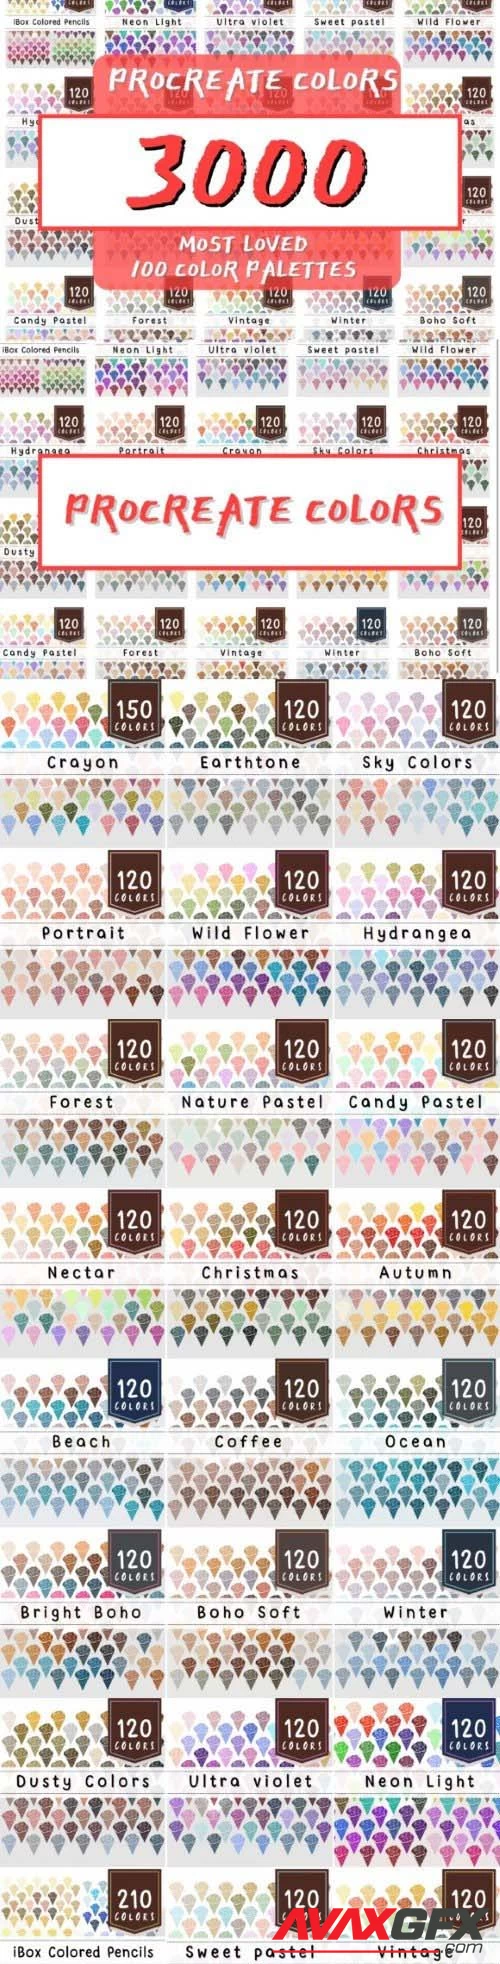 Color Bundle - 3000 Procreate Colors